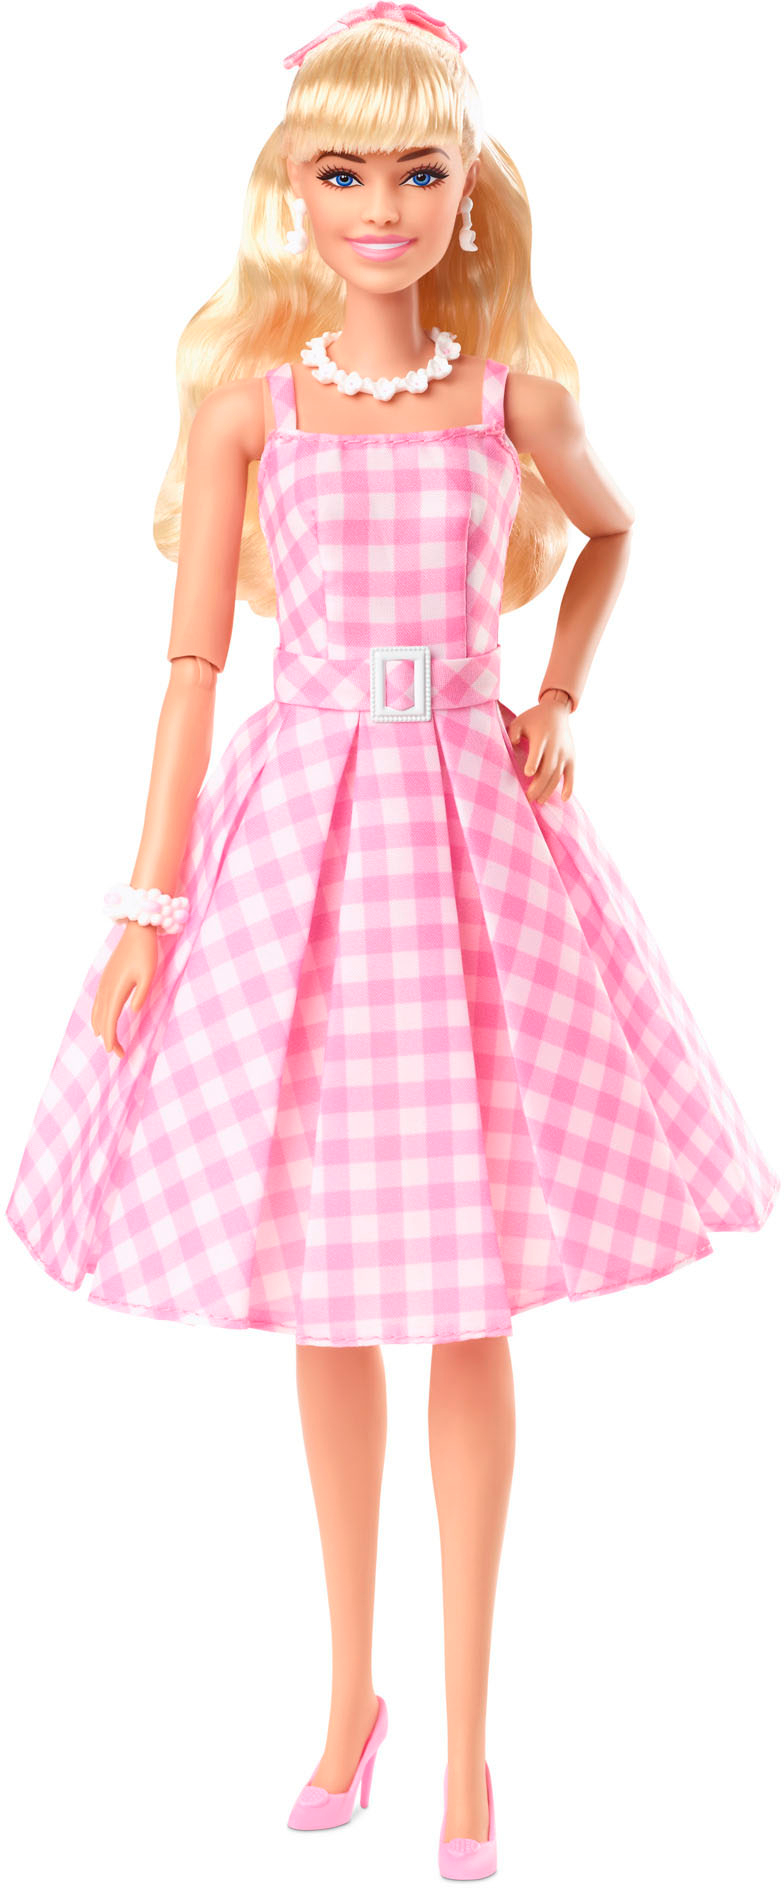 barbie movie gingham dress